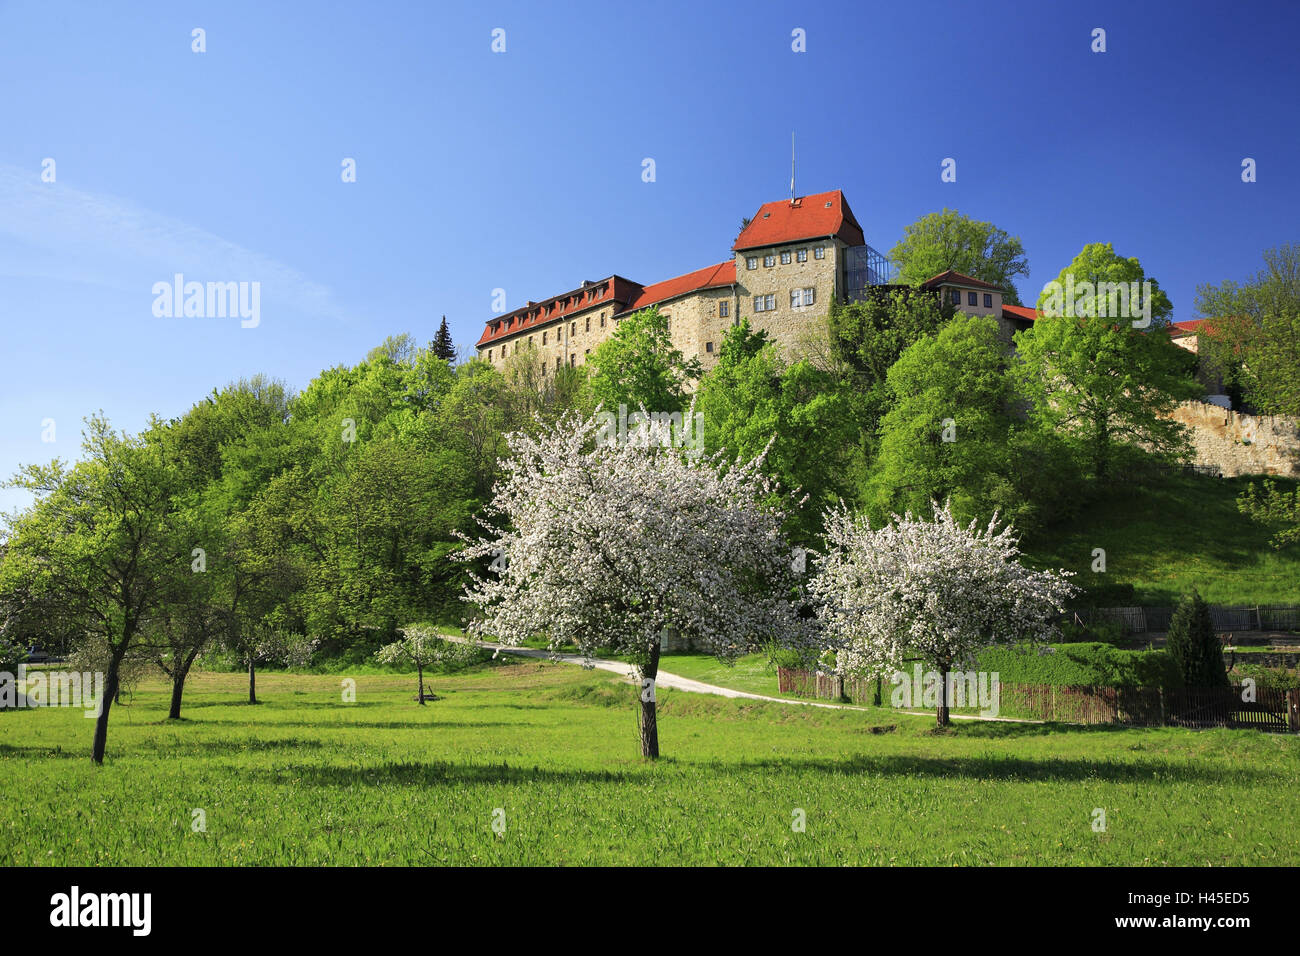 Castle Creuzburg, Thuringia, Germany, Stock Photo